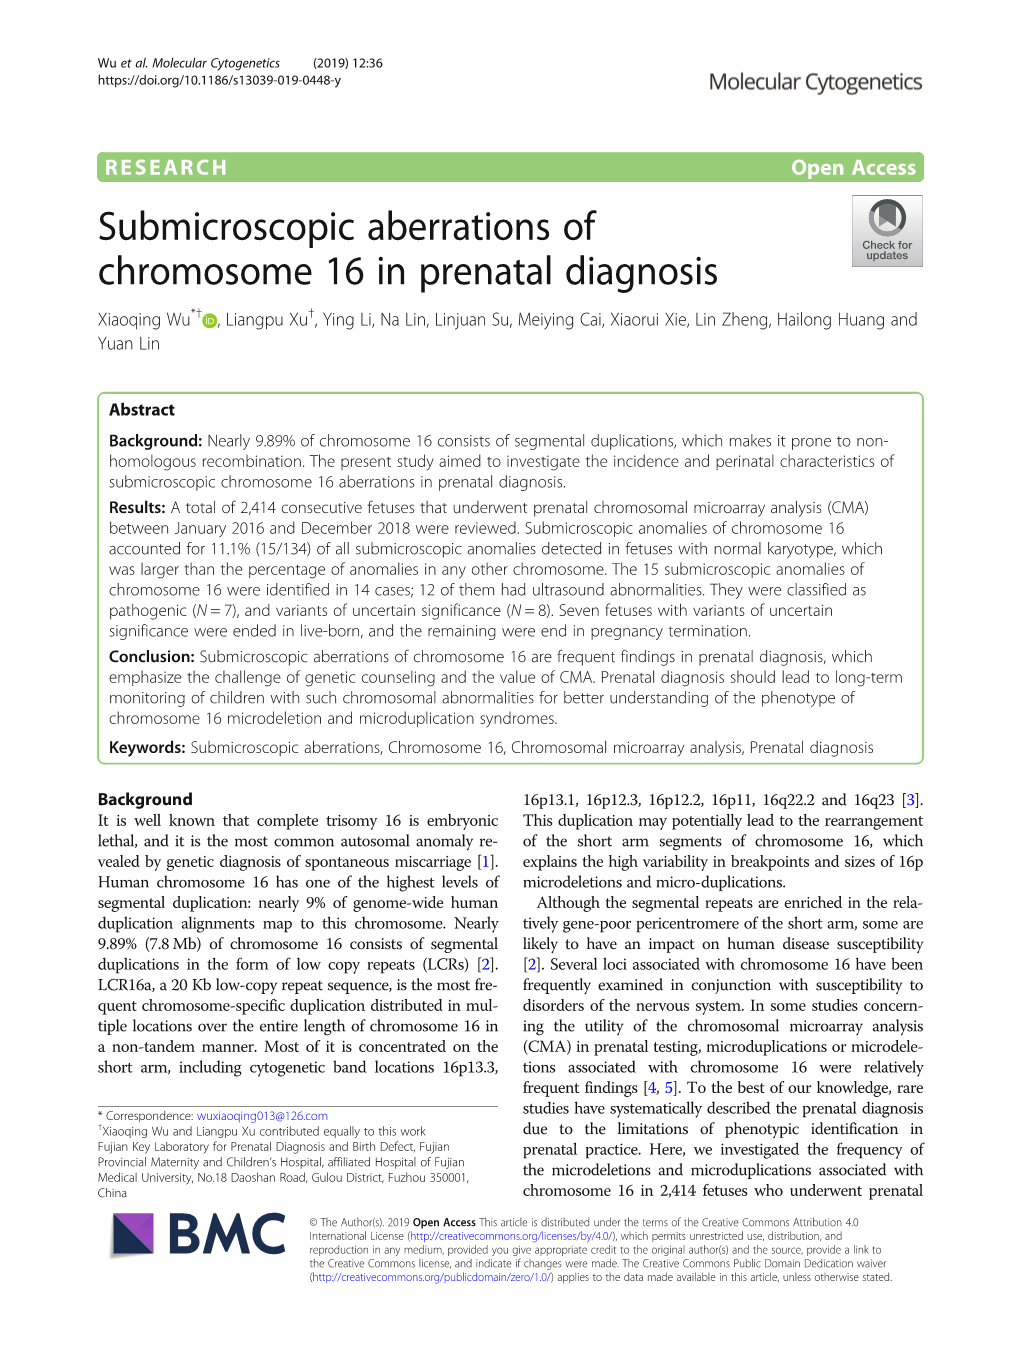 Submicroscopic Aberrations of Chromosome 16 in Prenatal Diagnosis